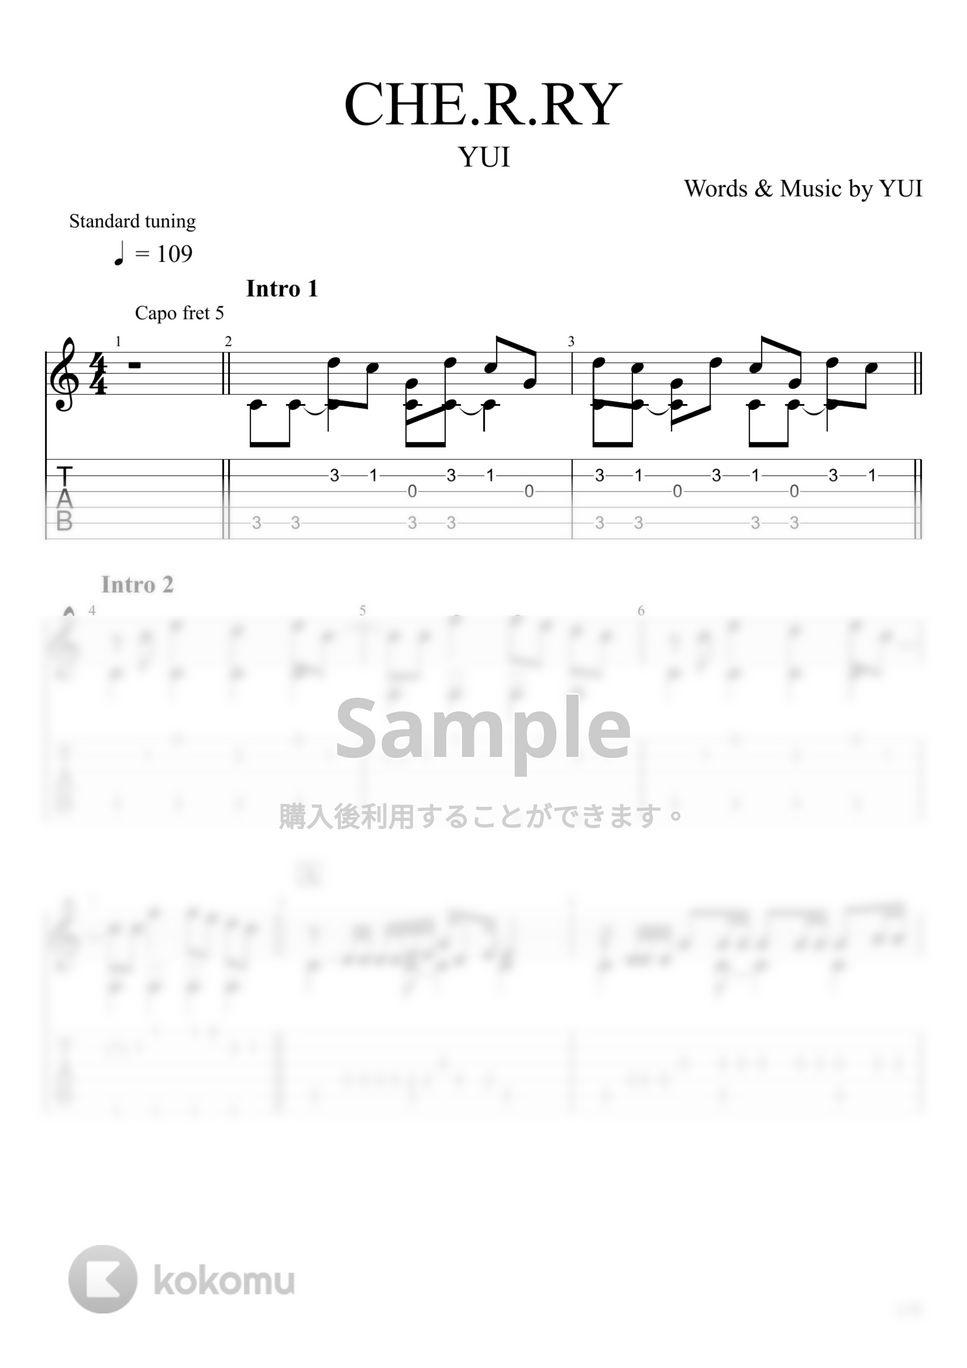 YUI - CHE.R.RY (ソロギター) by u3danchou